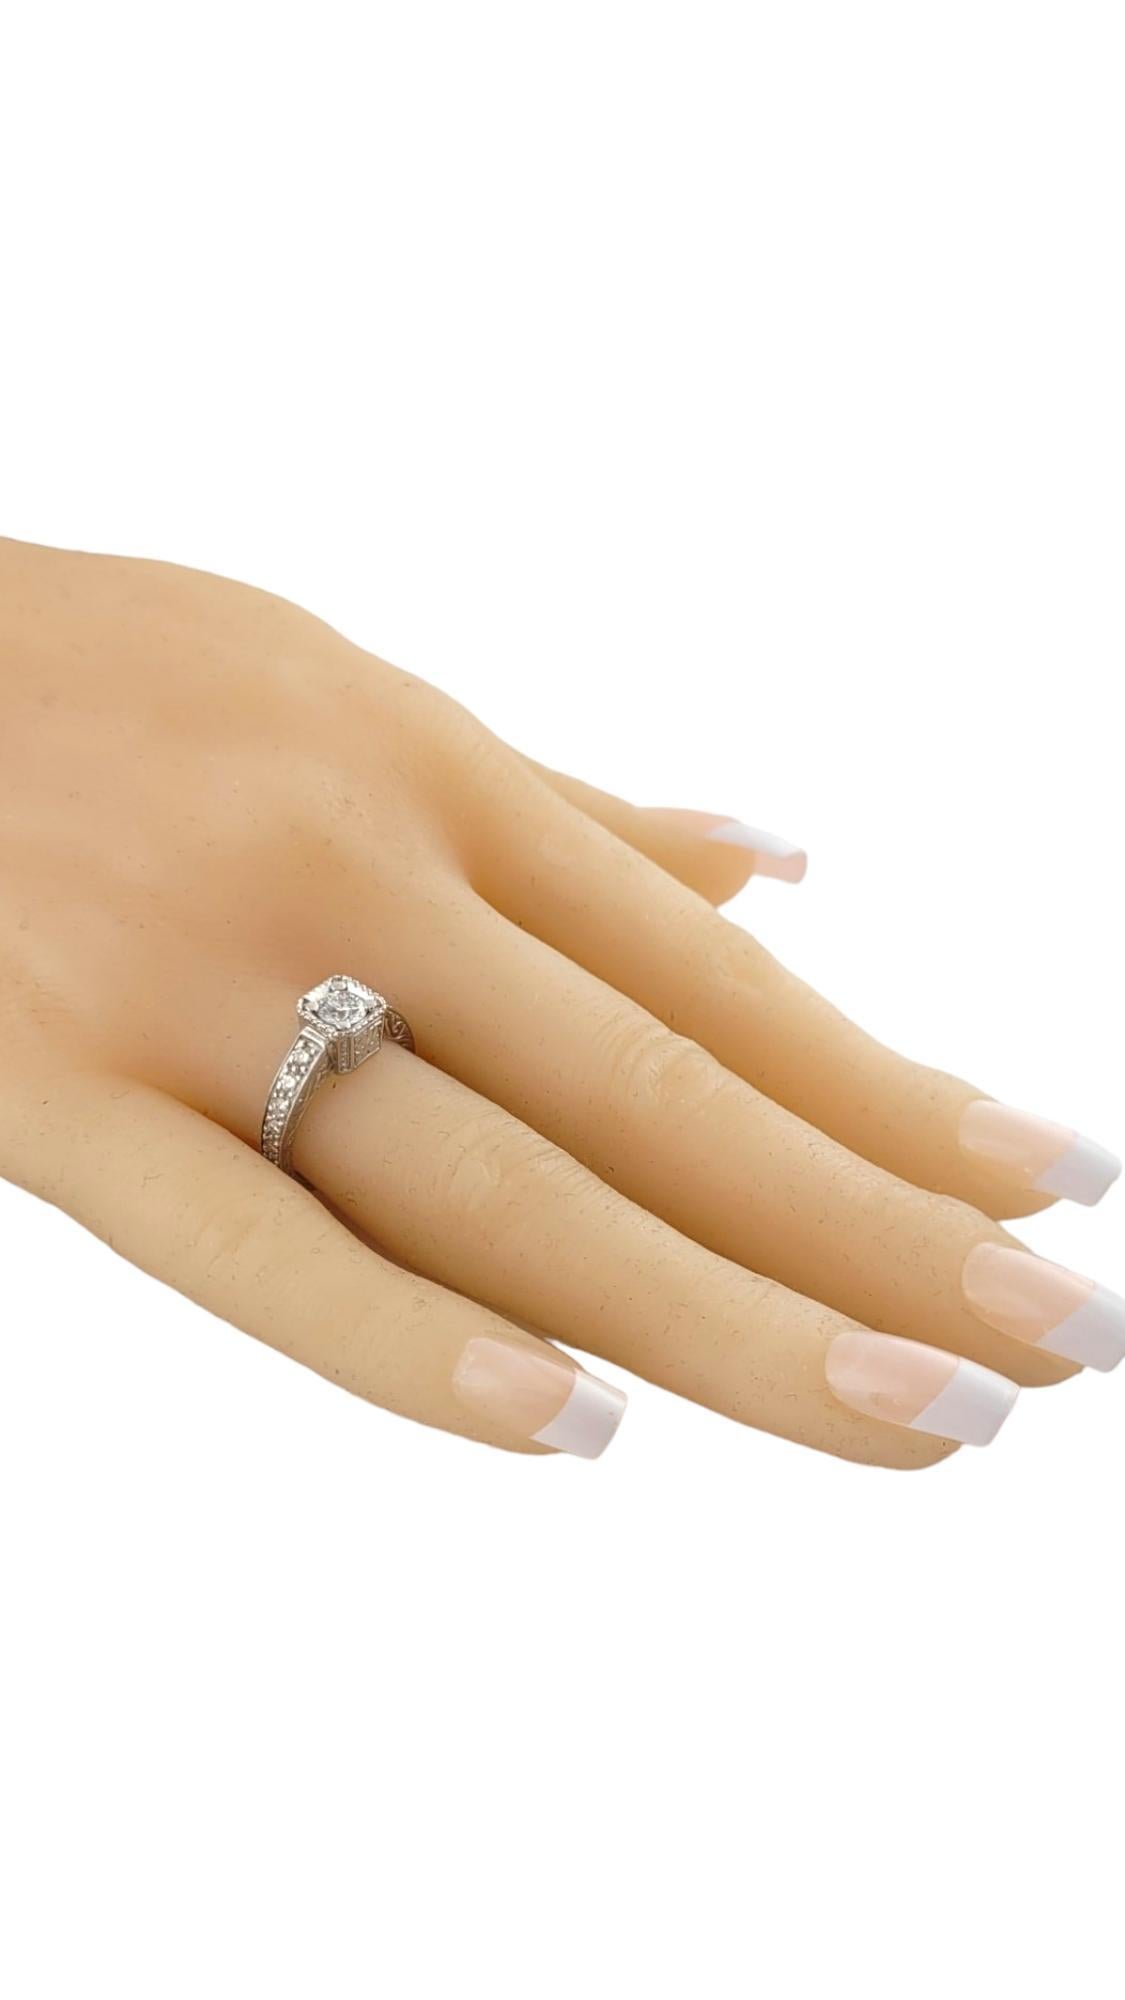 18 Karat White Gold Diamond Engagement Ring Size 5.5 #16960 For Sale 2